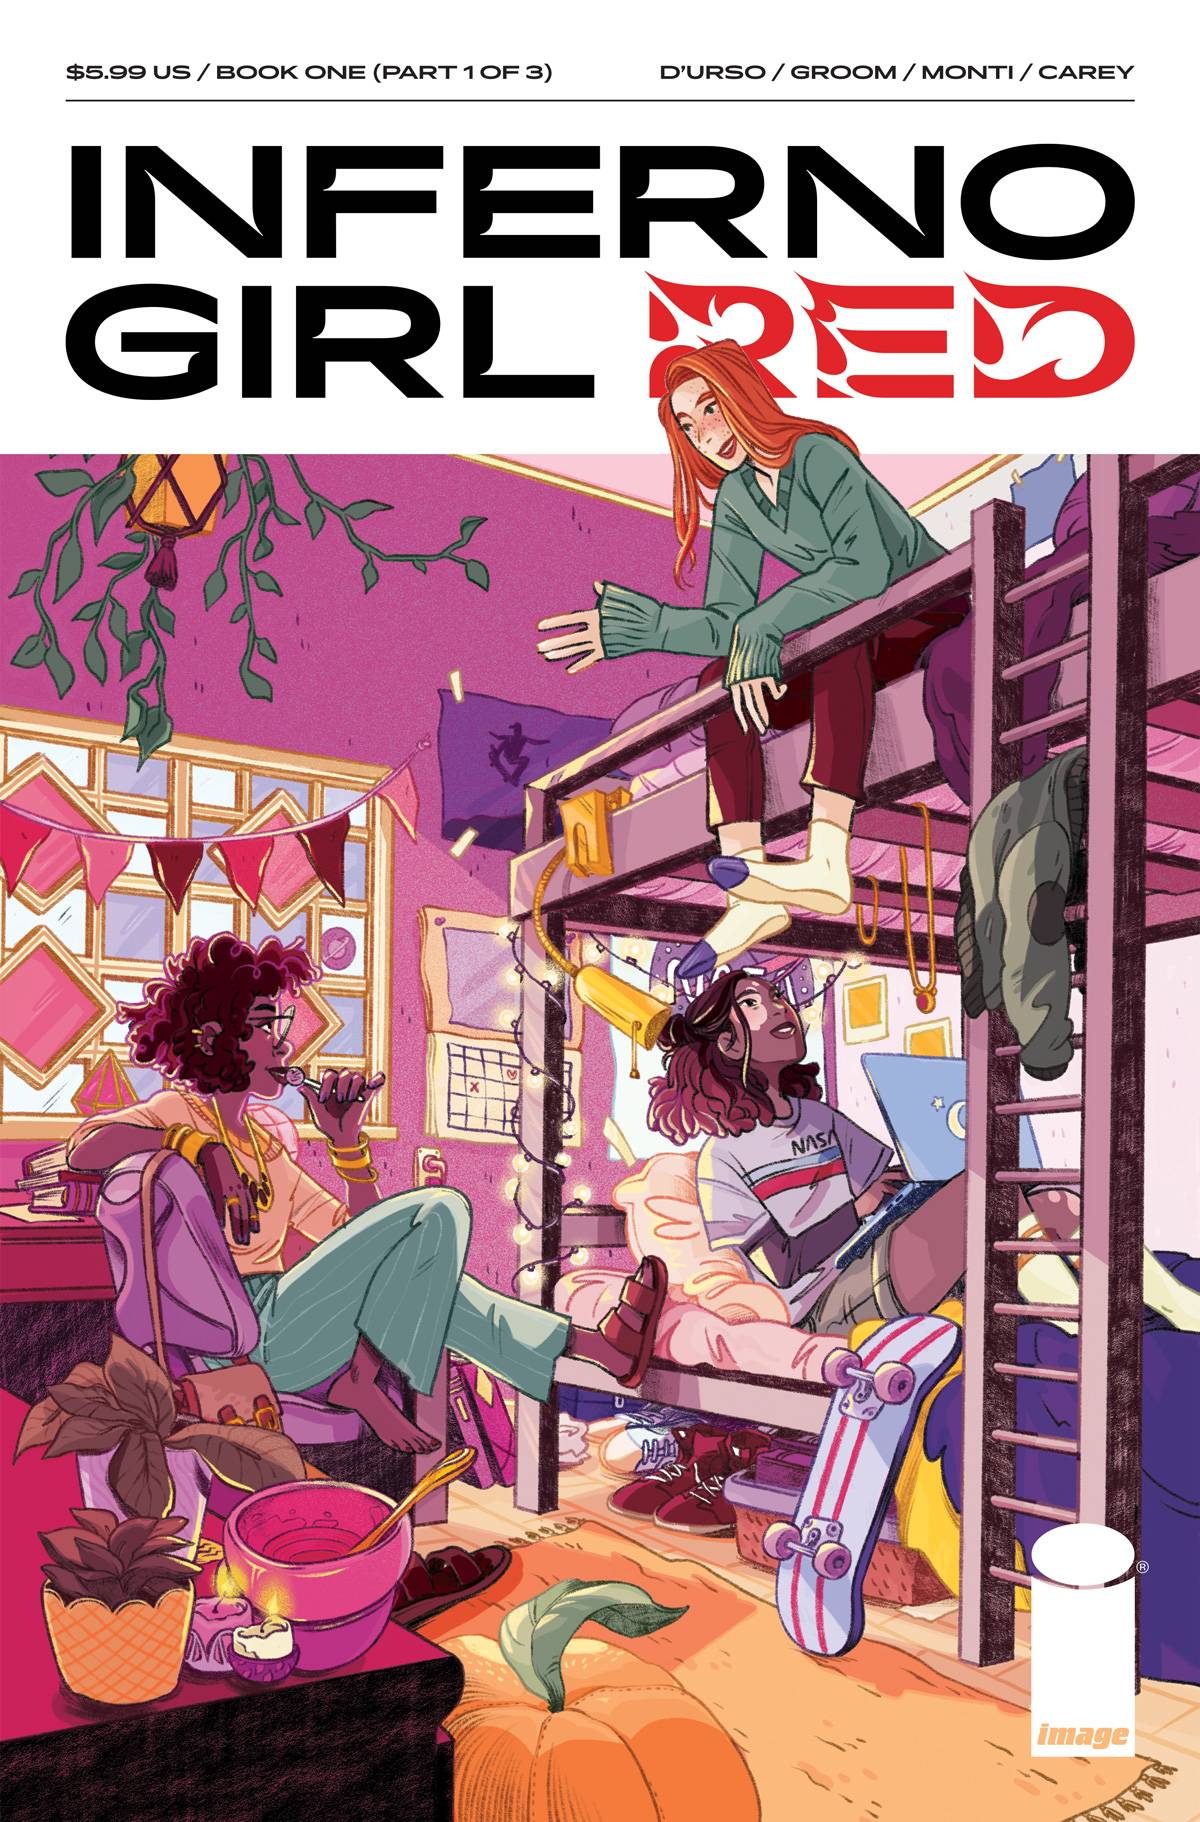 INFERNO GIRL RED BOOK ONE #1 (OF 3) CVR C GOUX